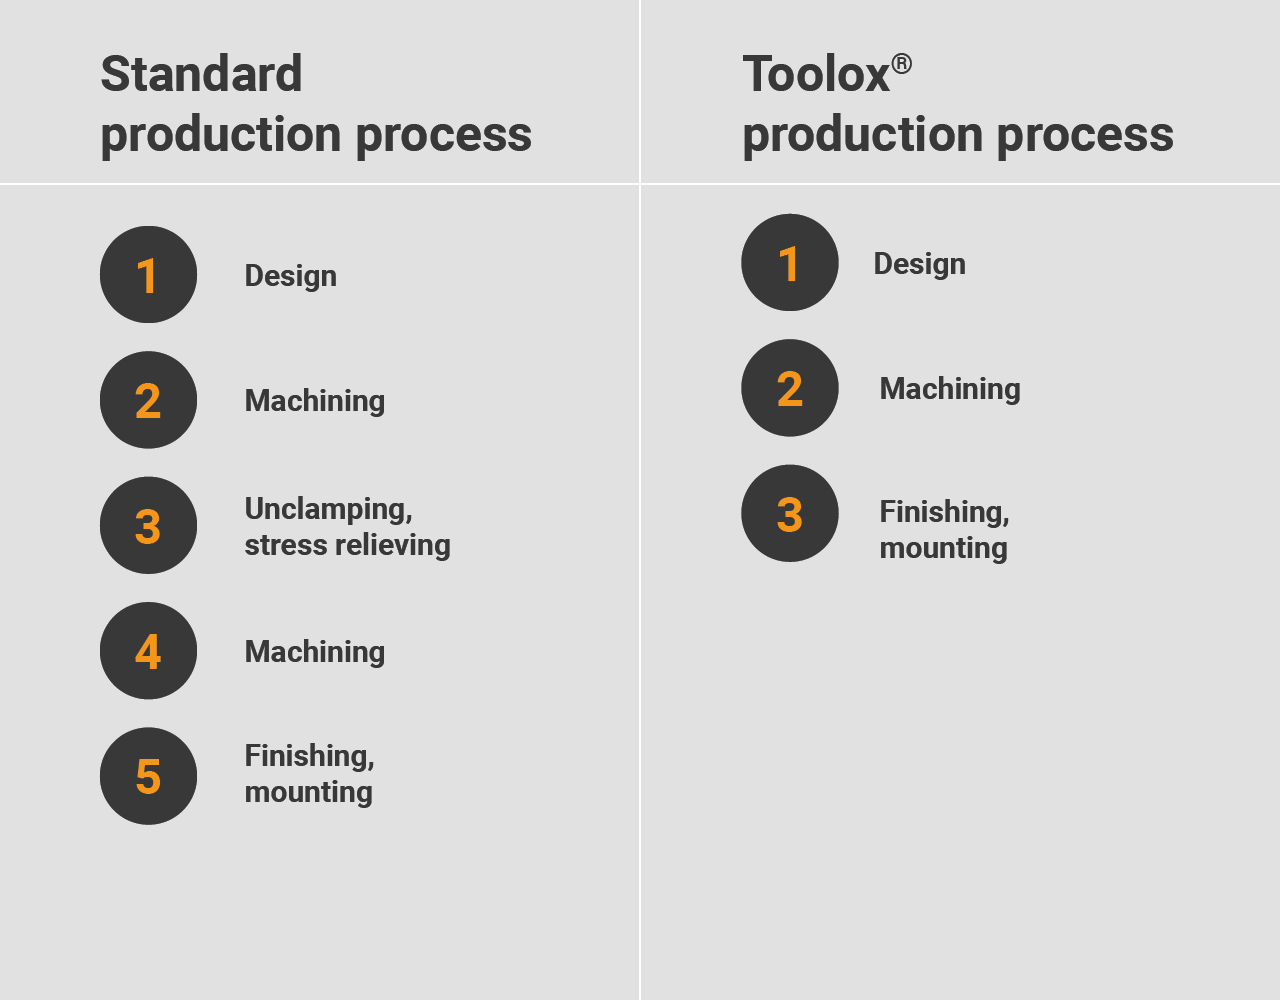 Production process Toolox vs standard